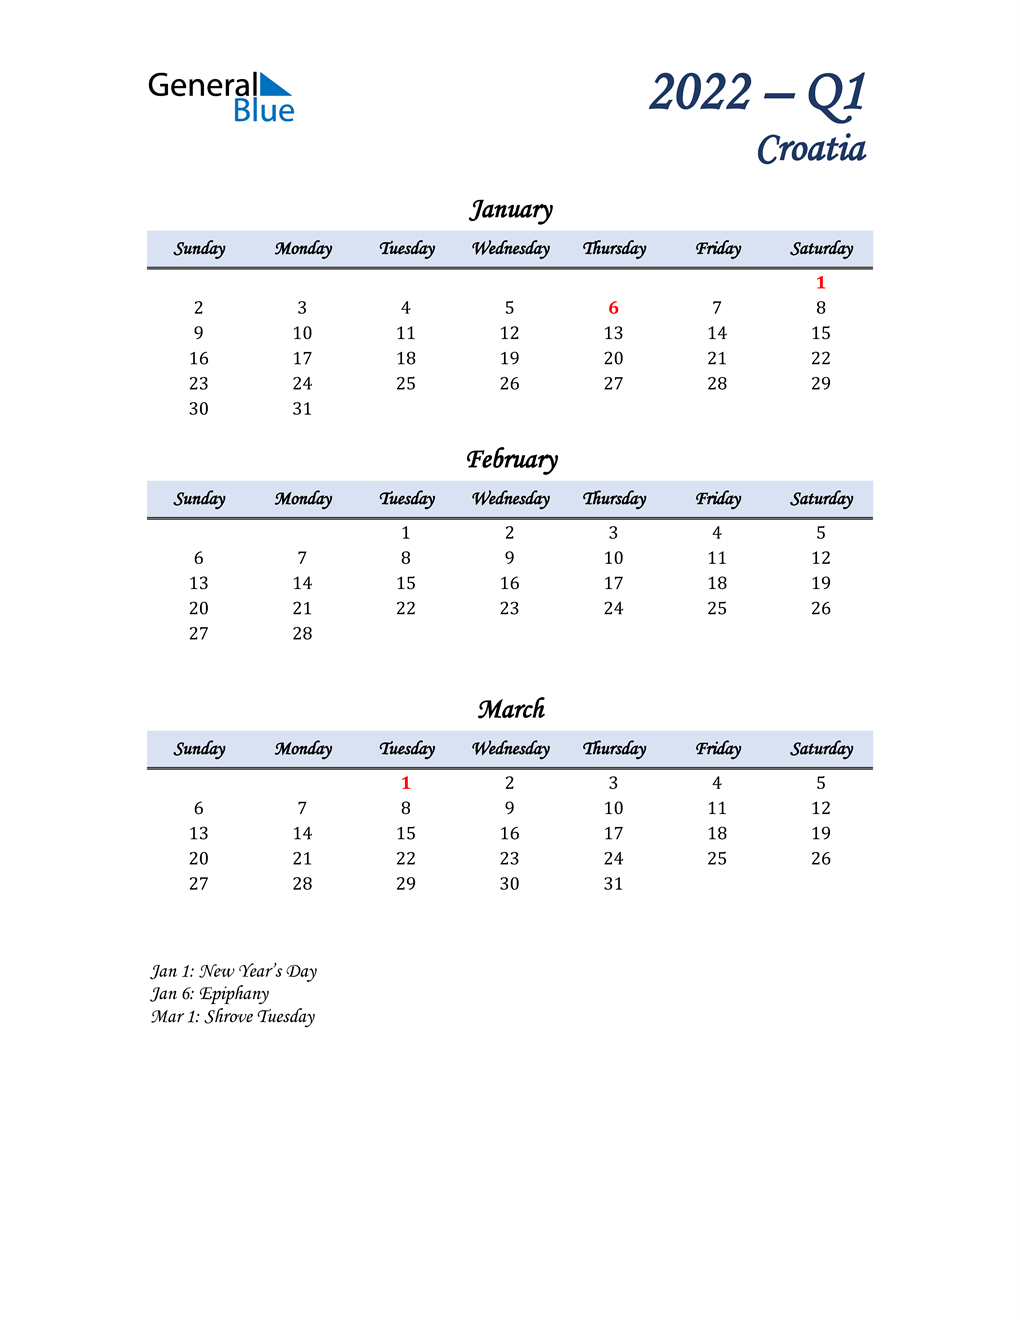  January, February, and March Calendar for Croatia